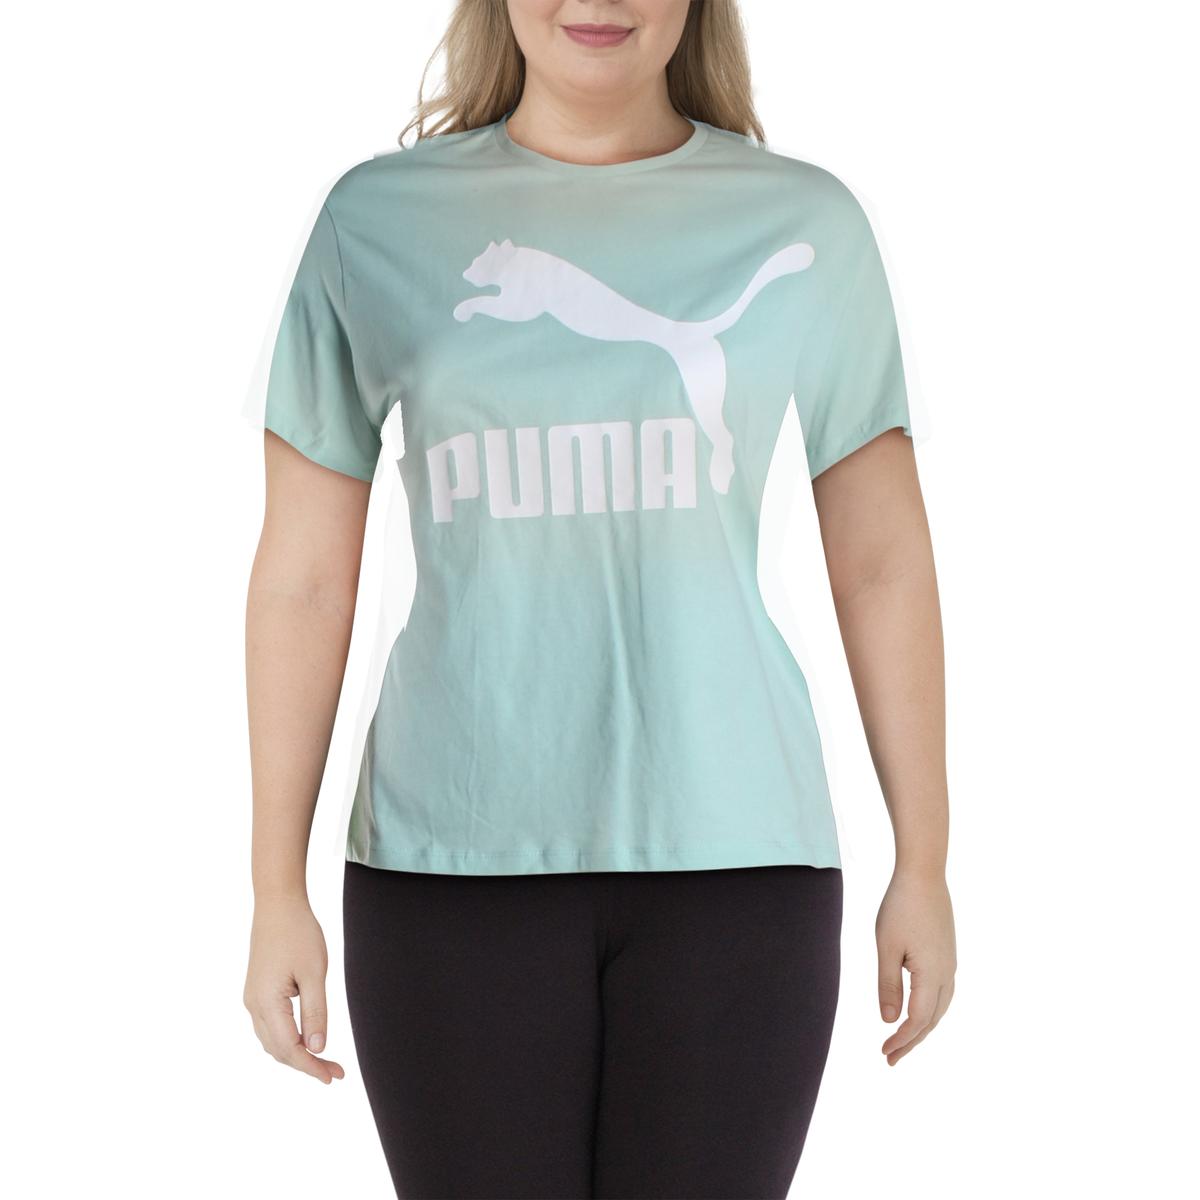 Puma Womens Classic Logo Green Fitness Running T-Shirt Athletic XL BHFO 3937 | eBay